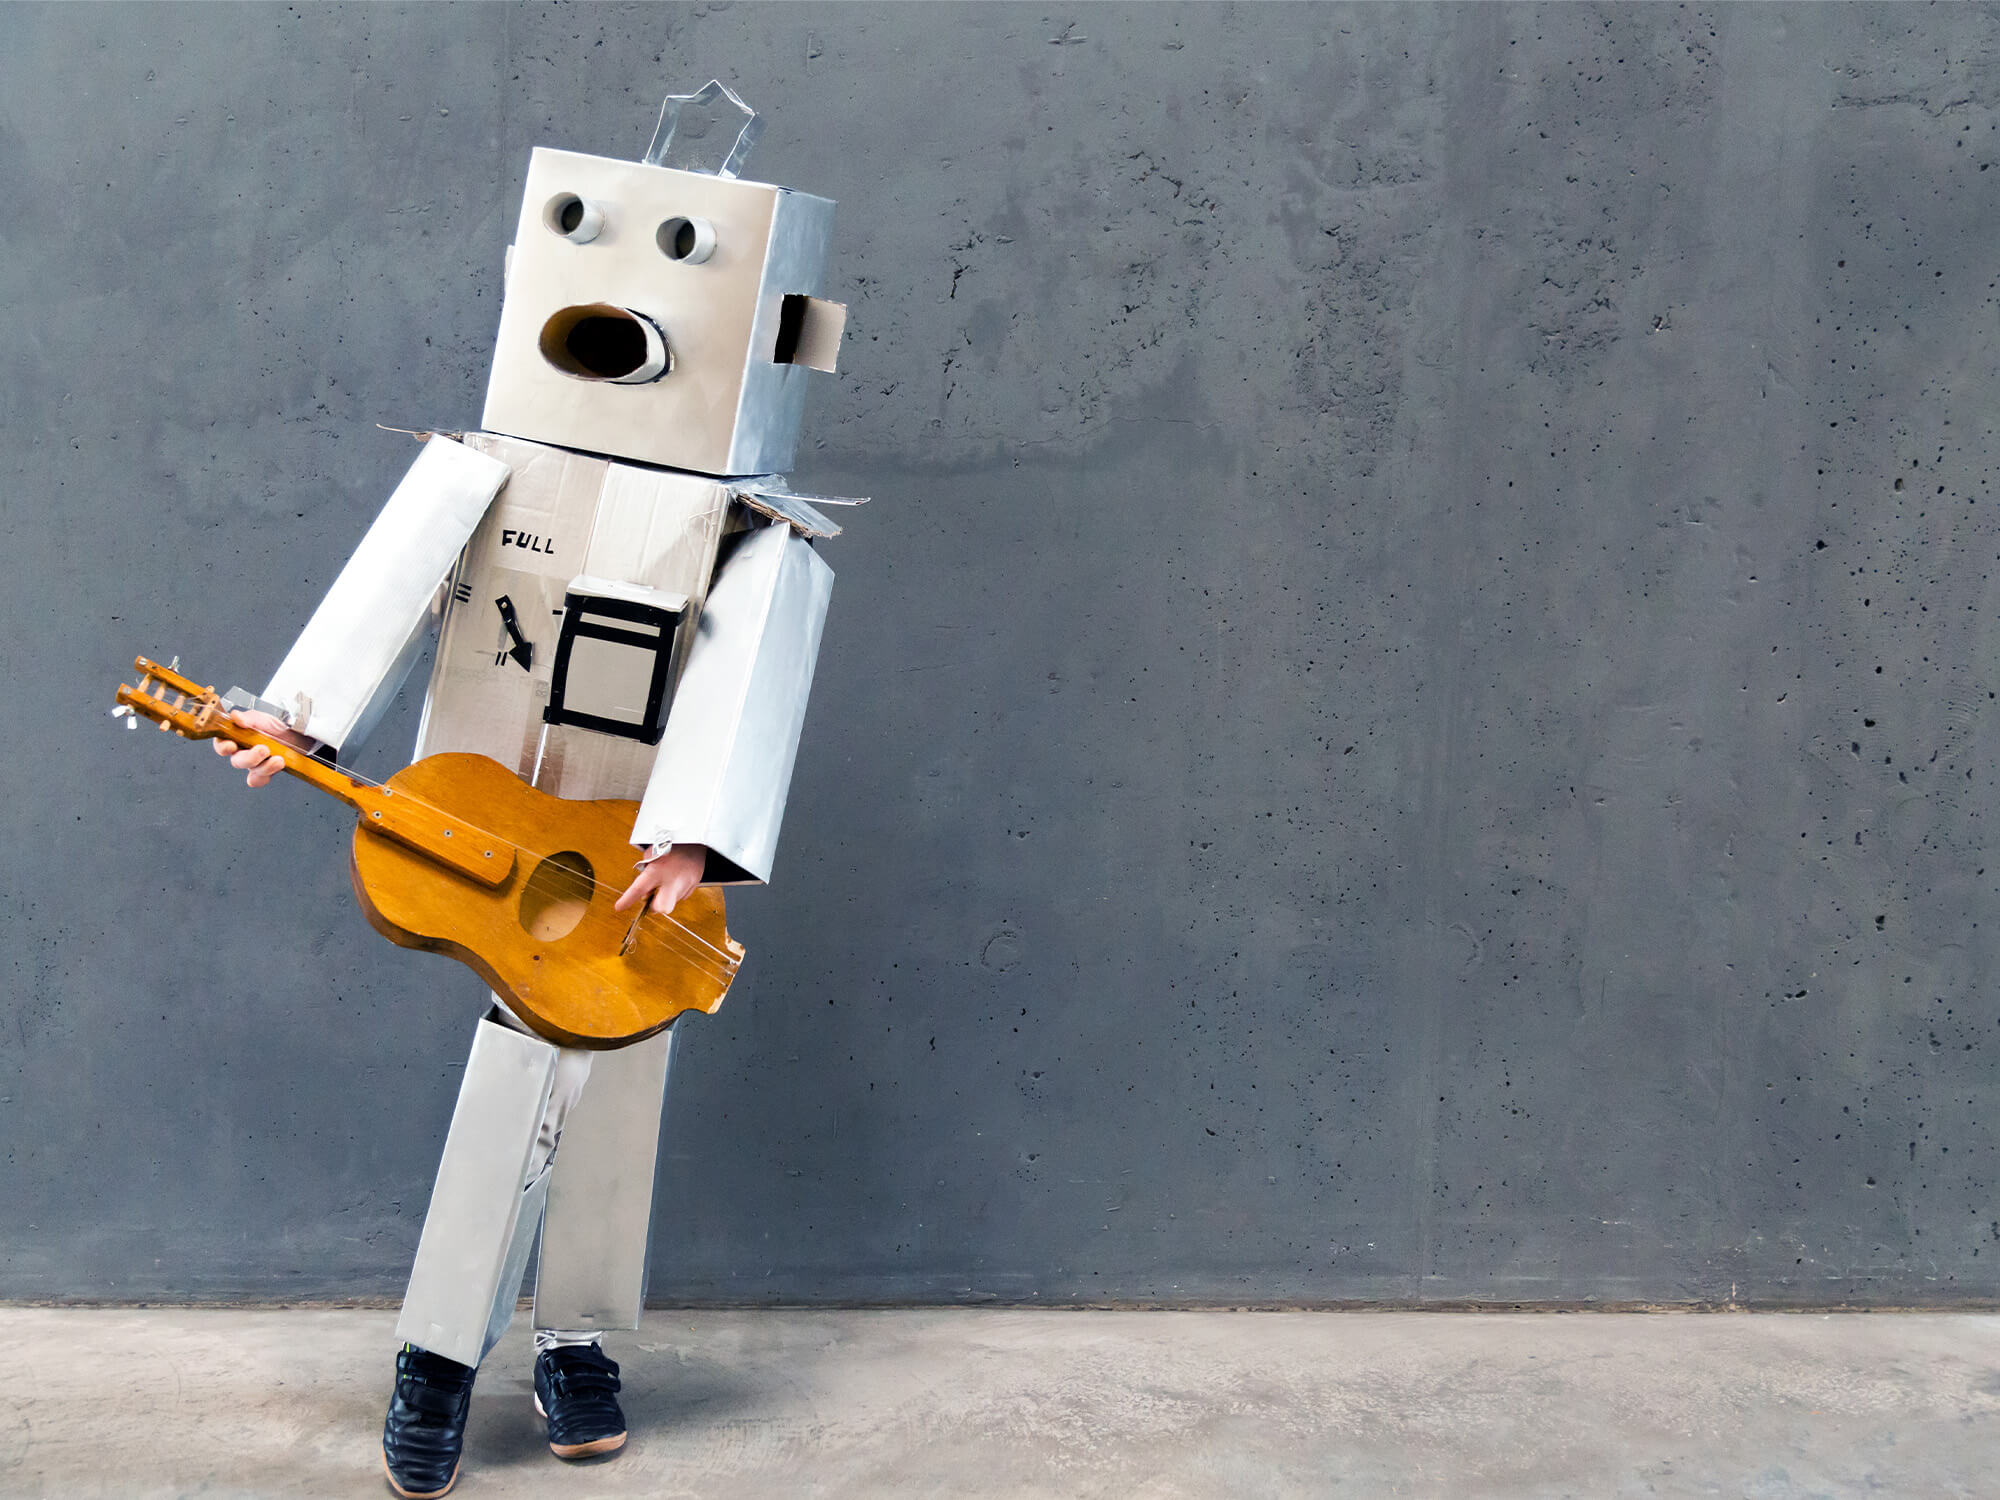 A small grey robot holding a guitar